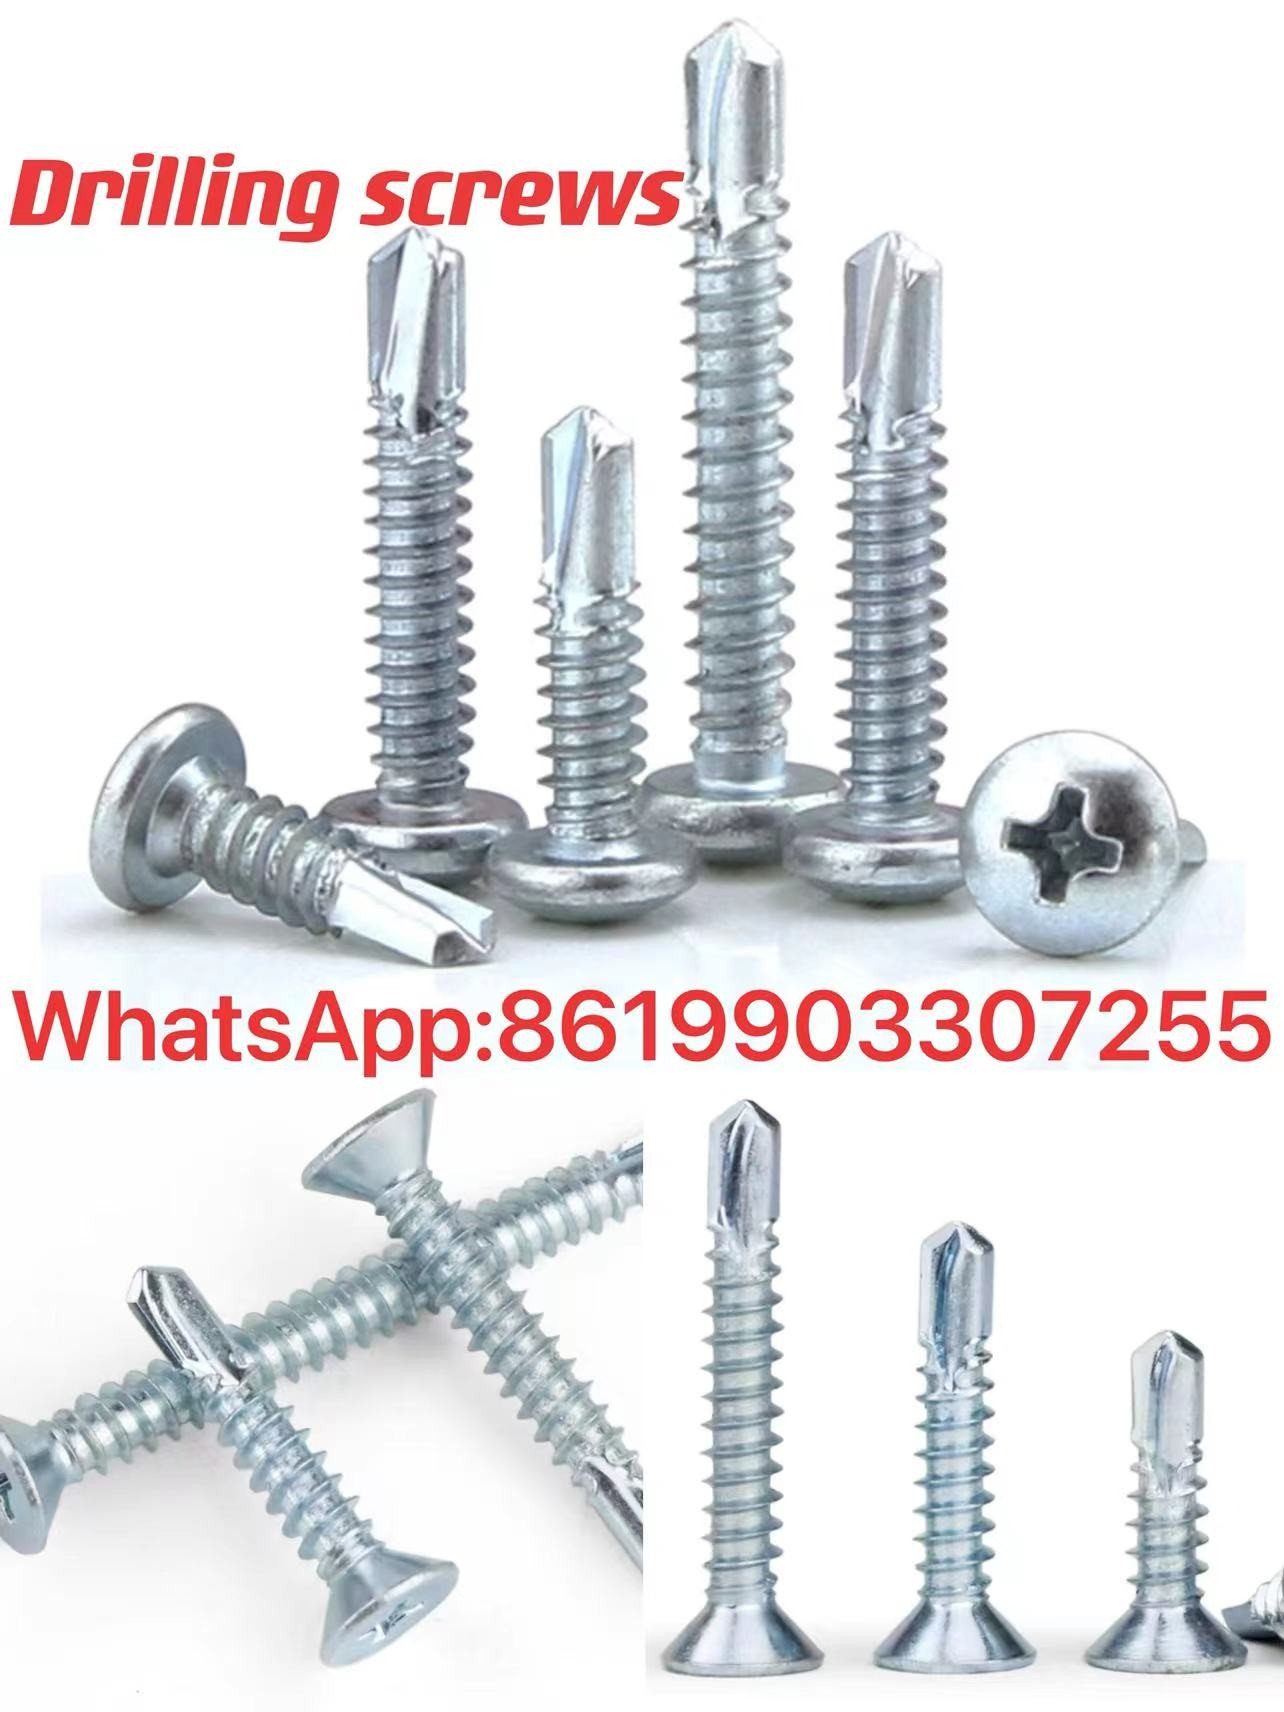 manufacturer’s drilling screws WhatsApp:8619903307255